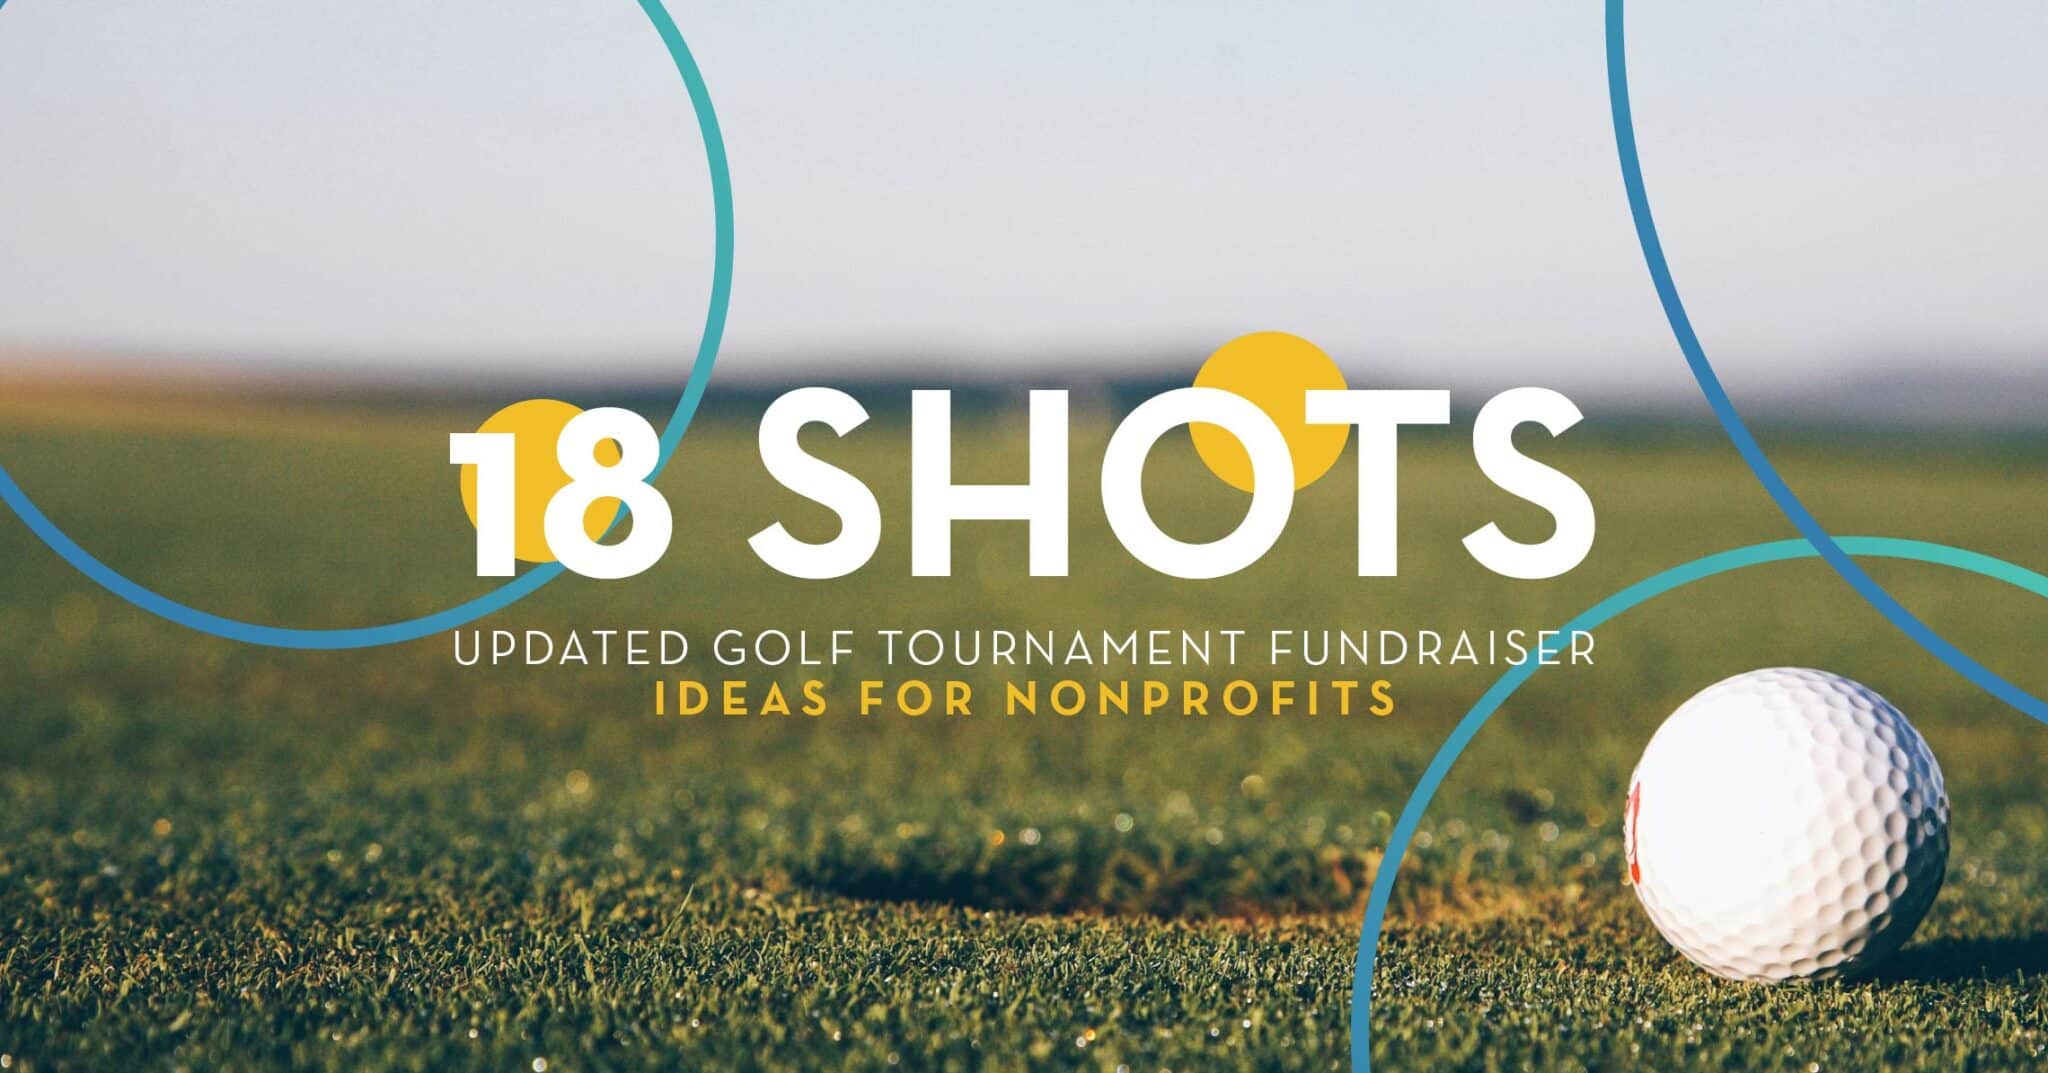 Photo: golf tournament betting games to raise money